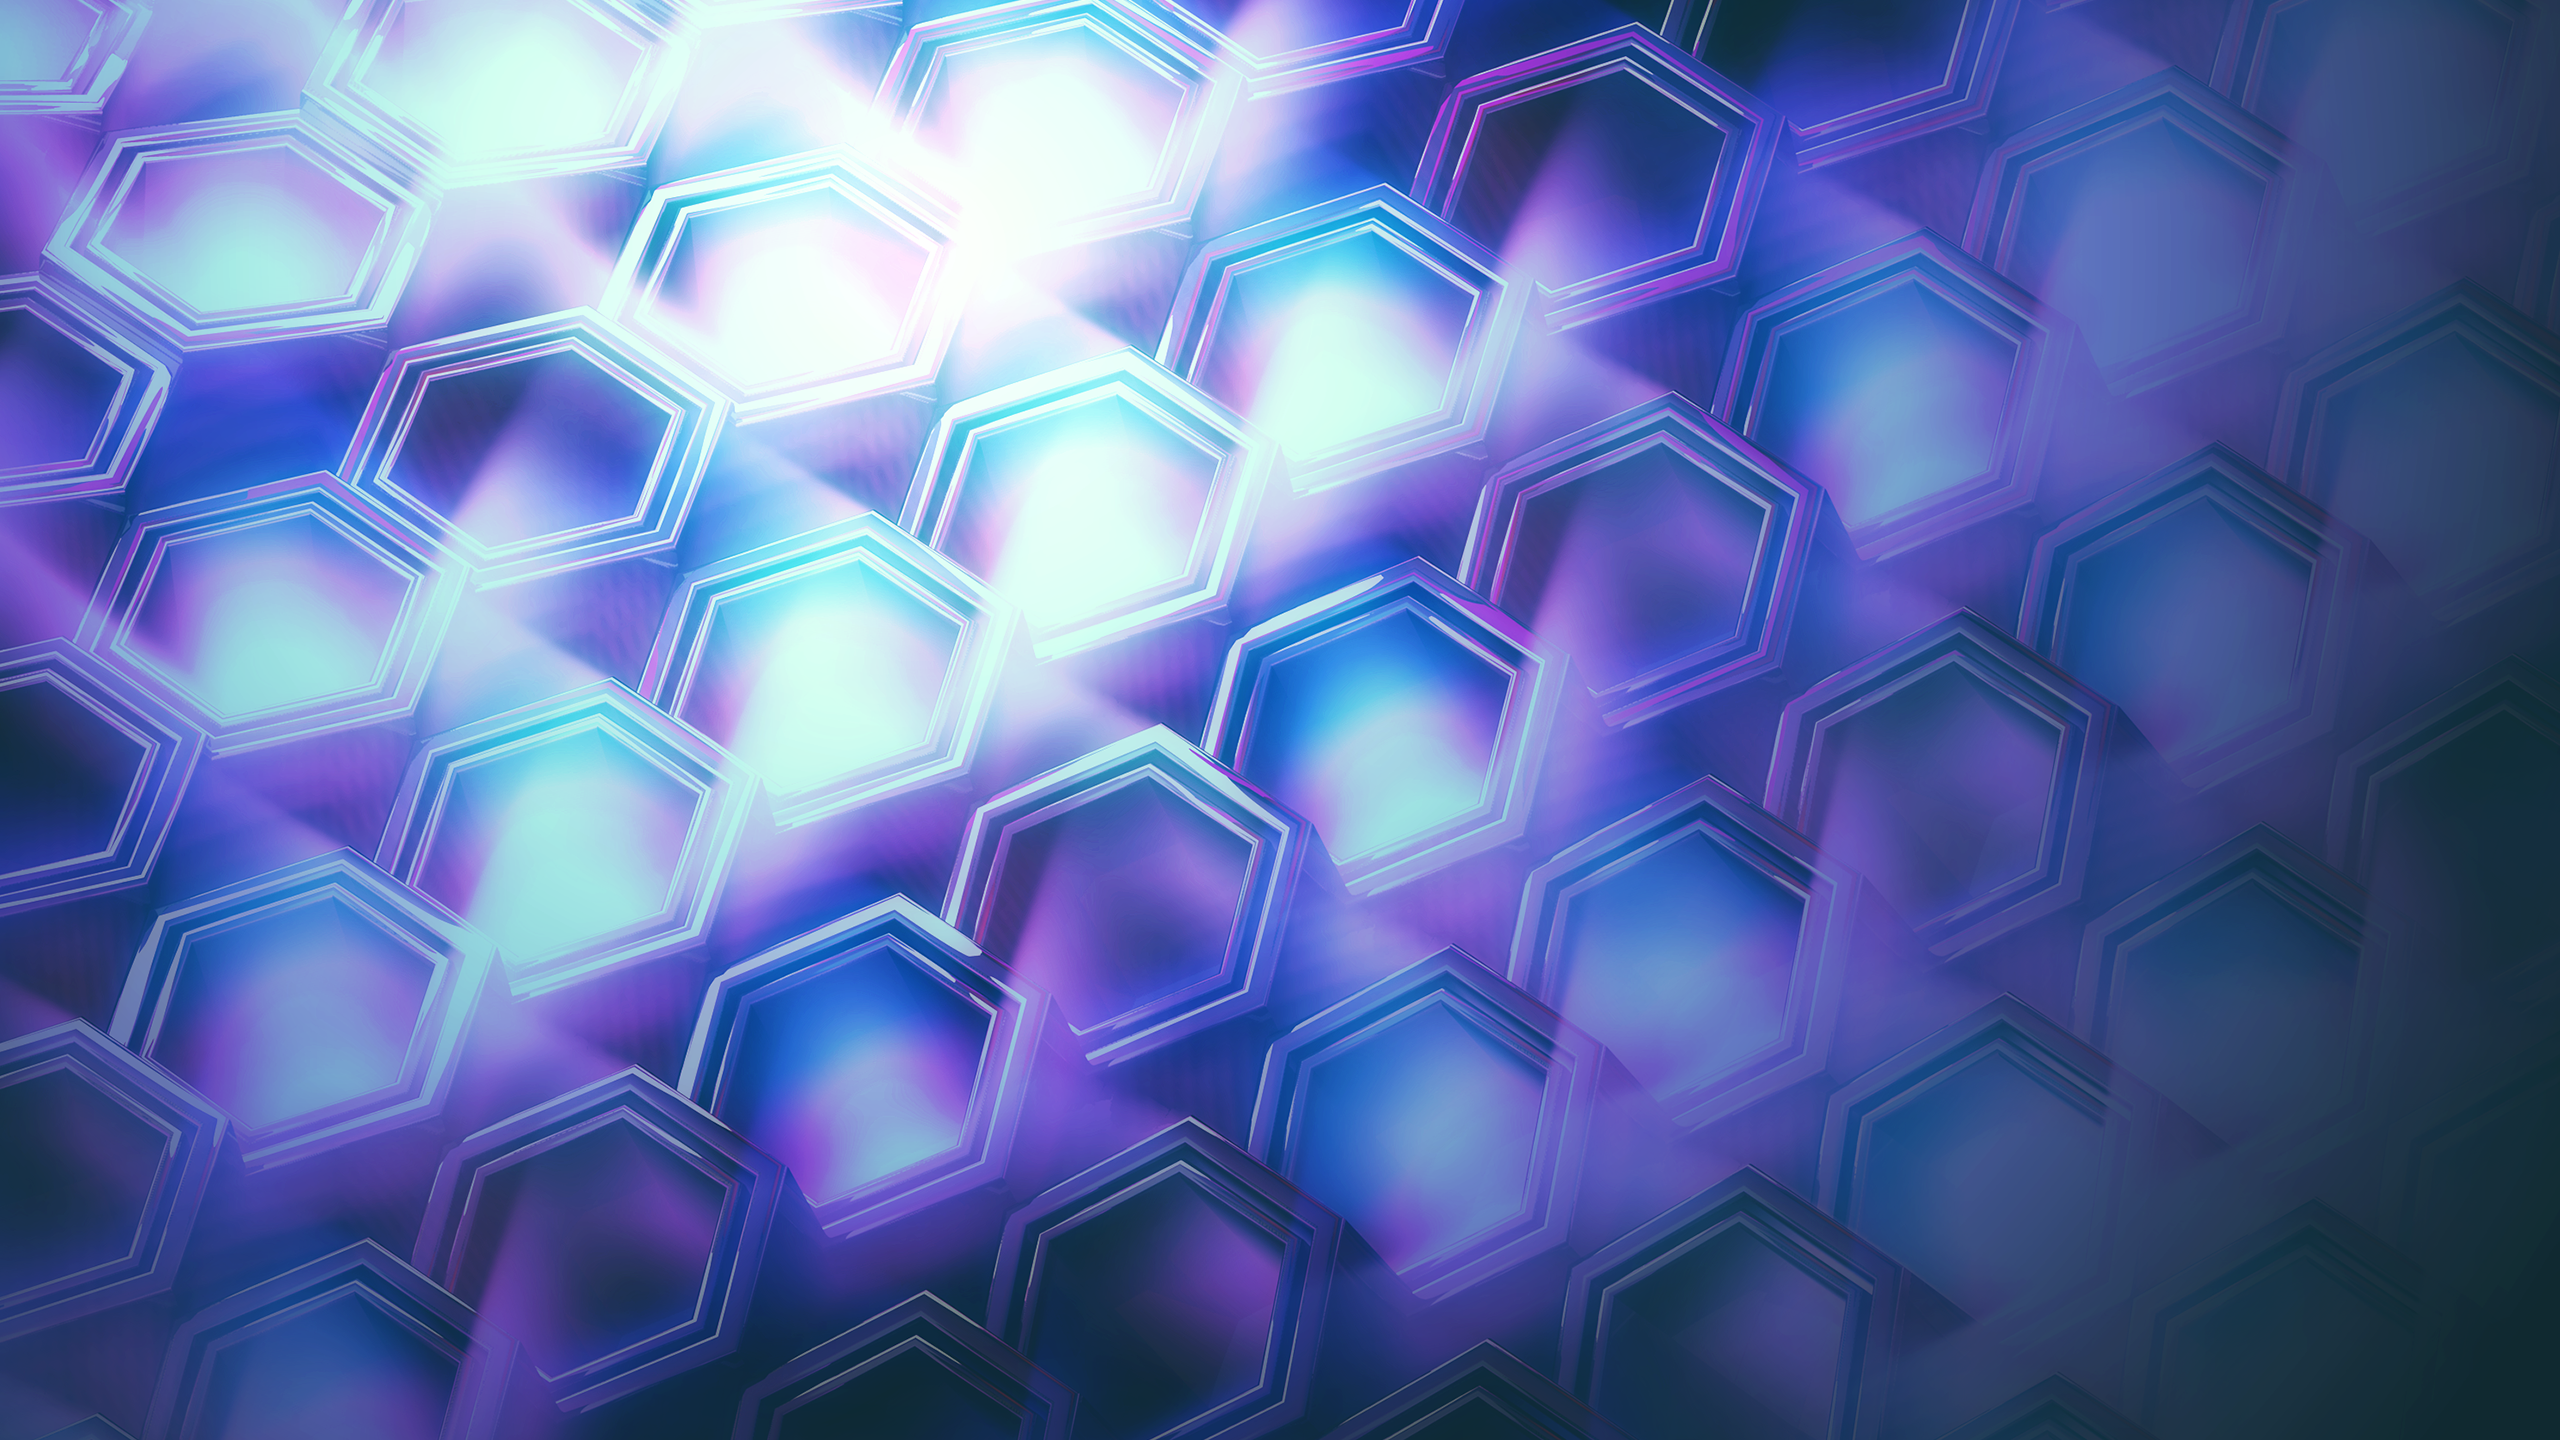 Abstract Hexagon Purple Digital Art 2560x1440